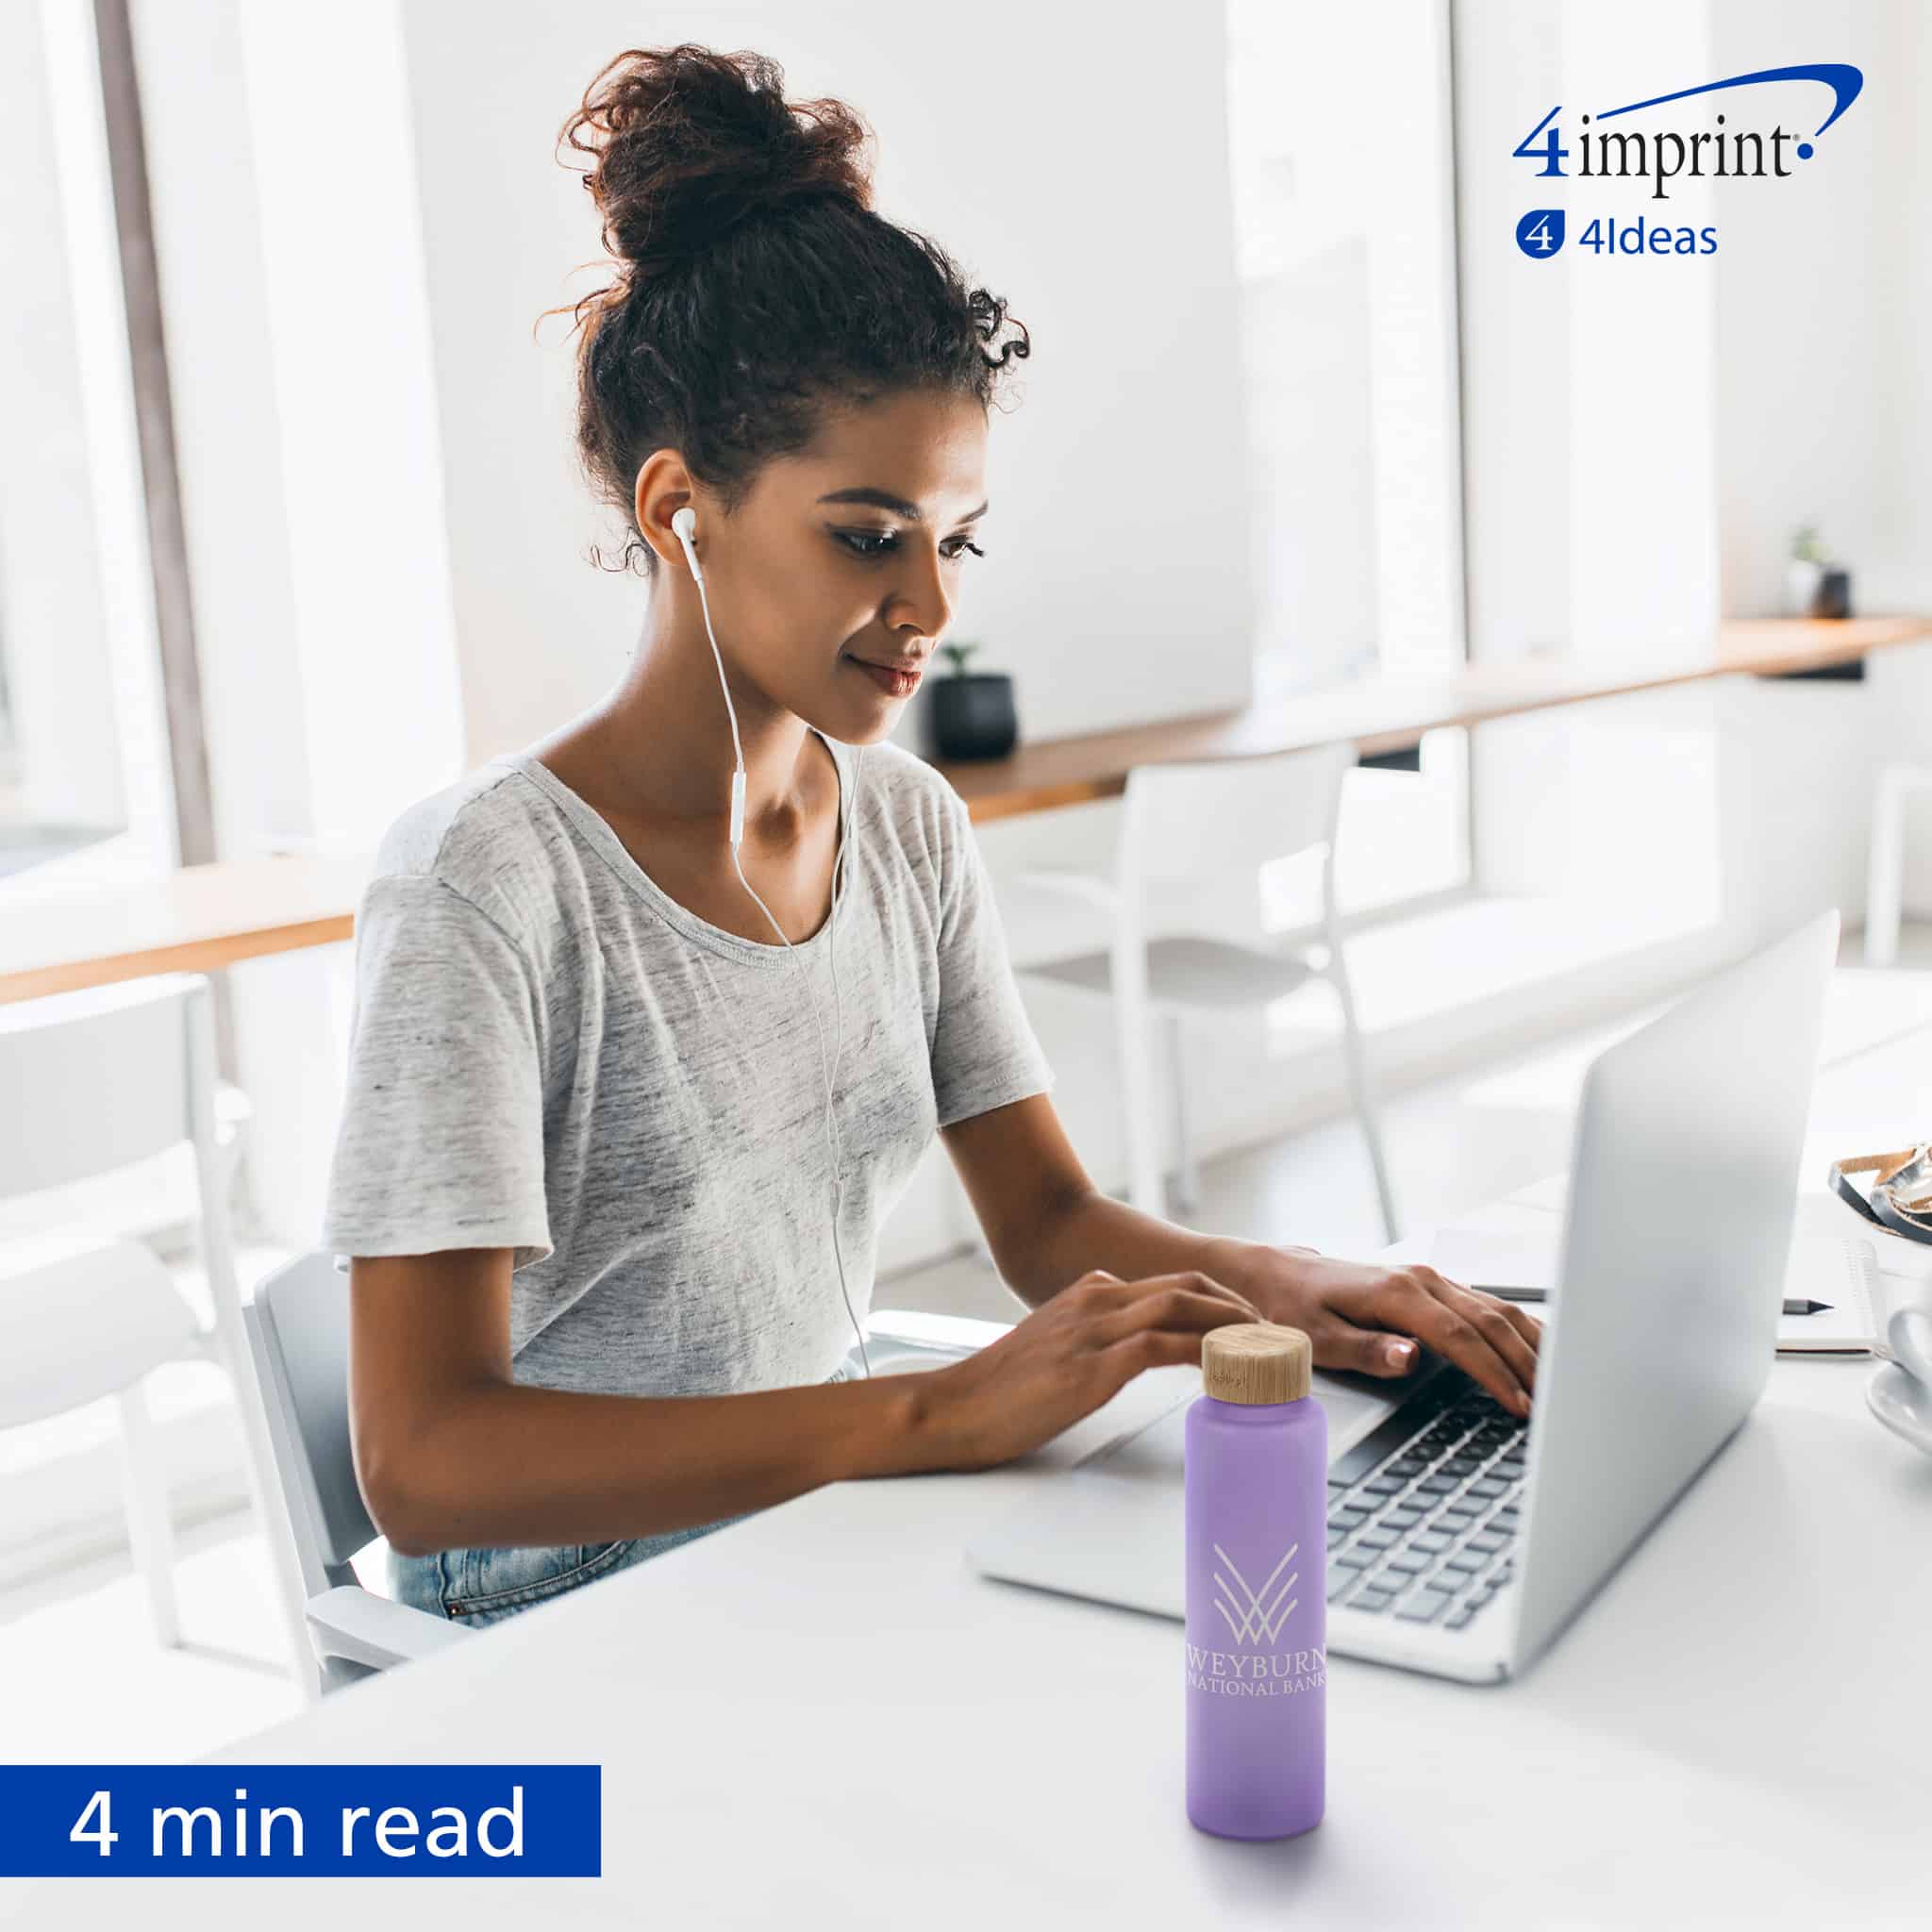 Woman wearing ear buds typing on laptop. A purple water bottle with a logo is on the desk.